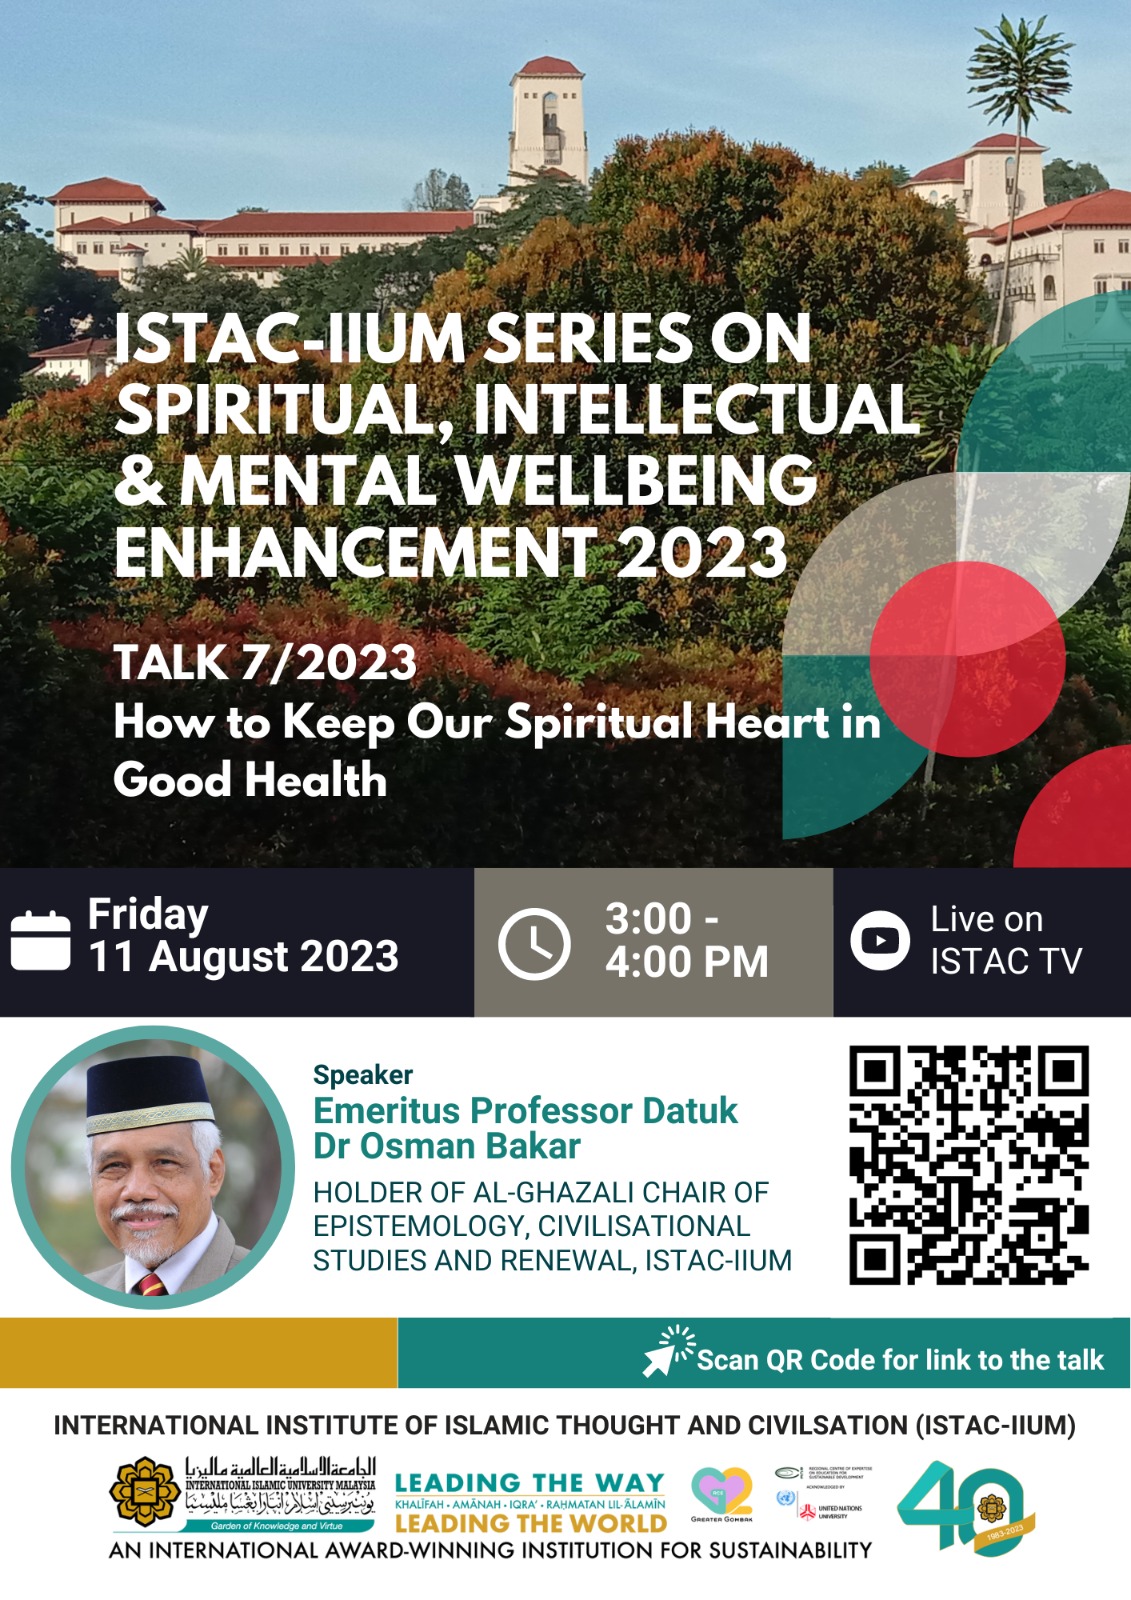 ISTAC-IIUM SERIES ON SPIRITUAL, INTELLECTUAL & MENTAL WELLBEING ENHANCEMENT 2023 - TALK 7/2023